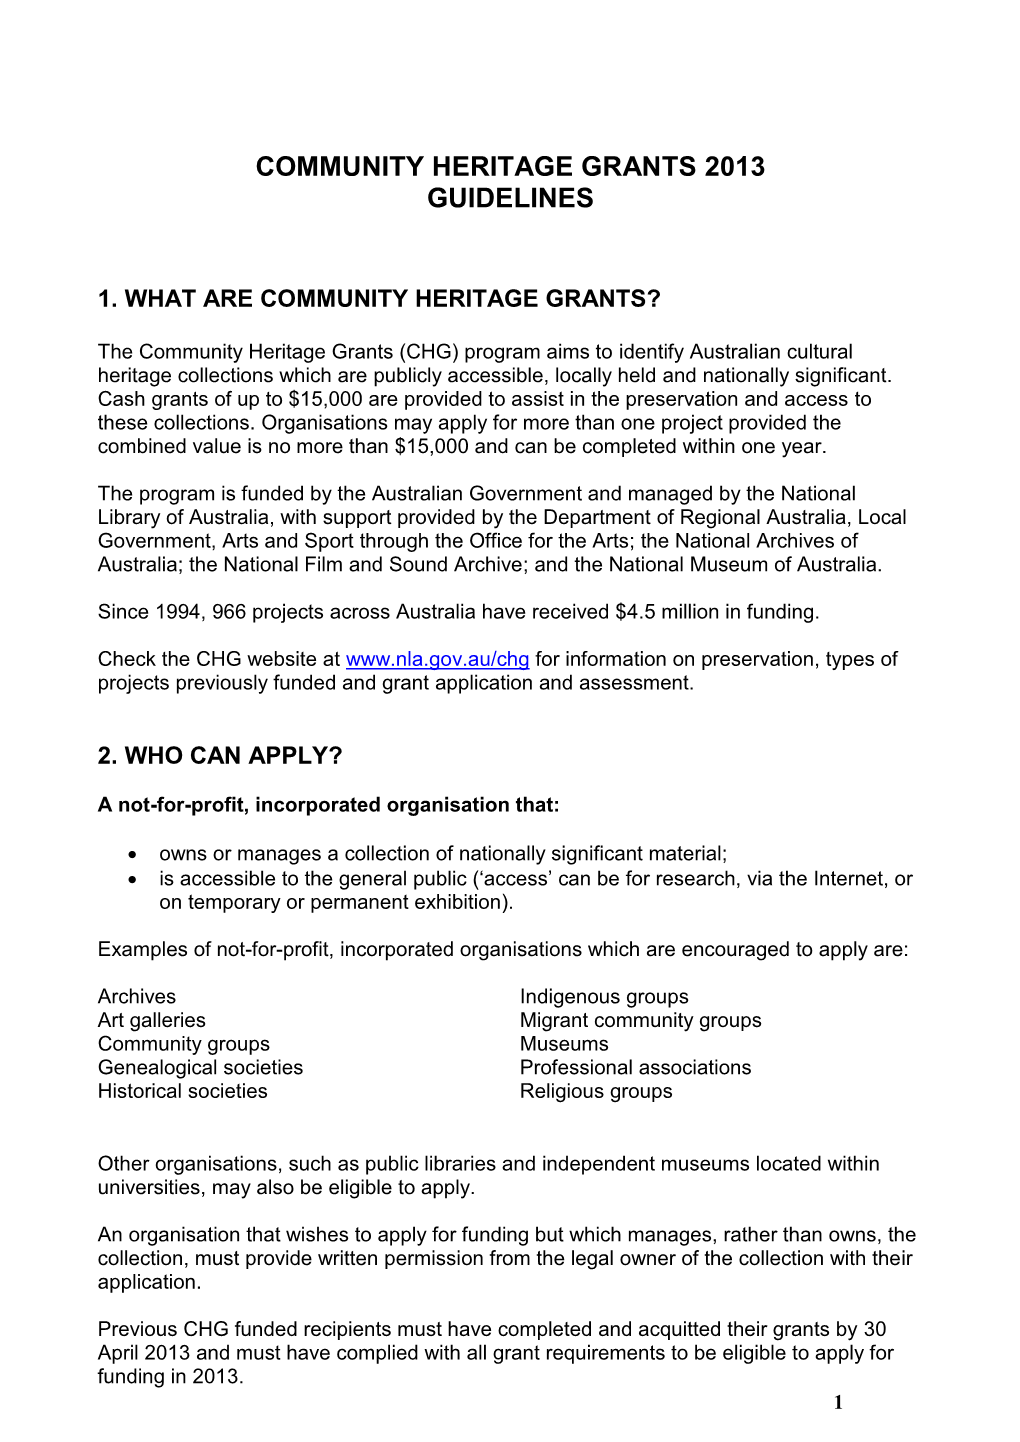 Community Heritage Grants 2009